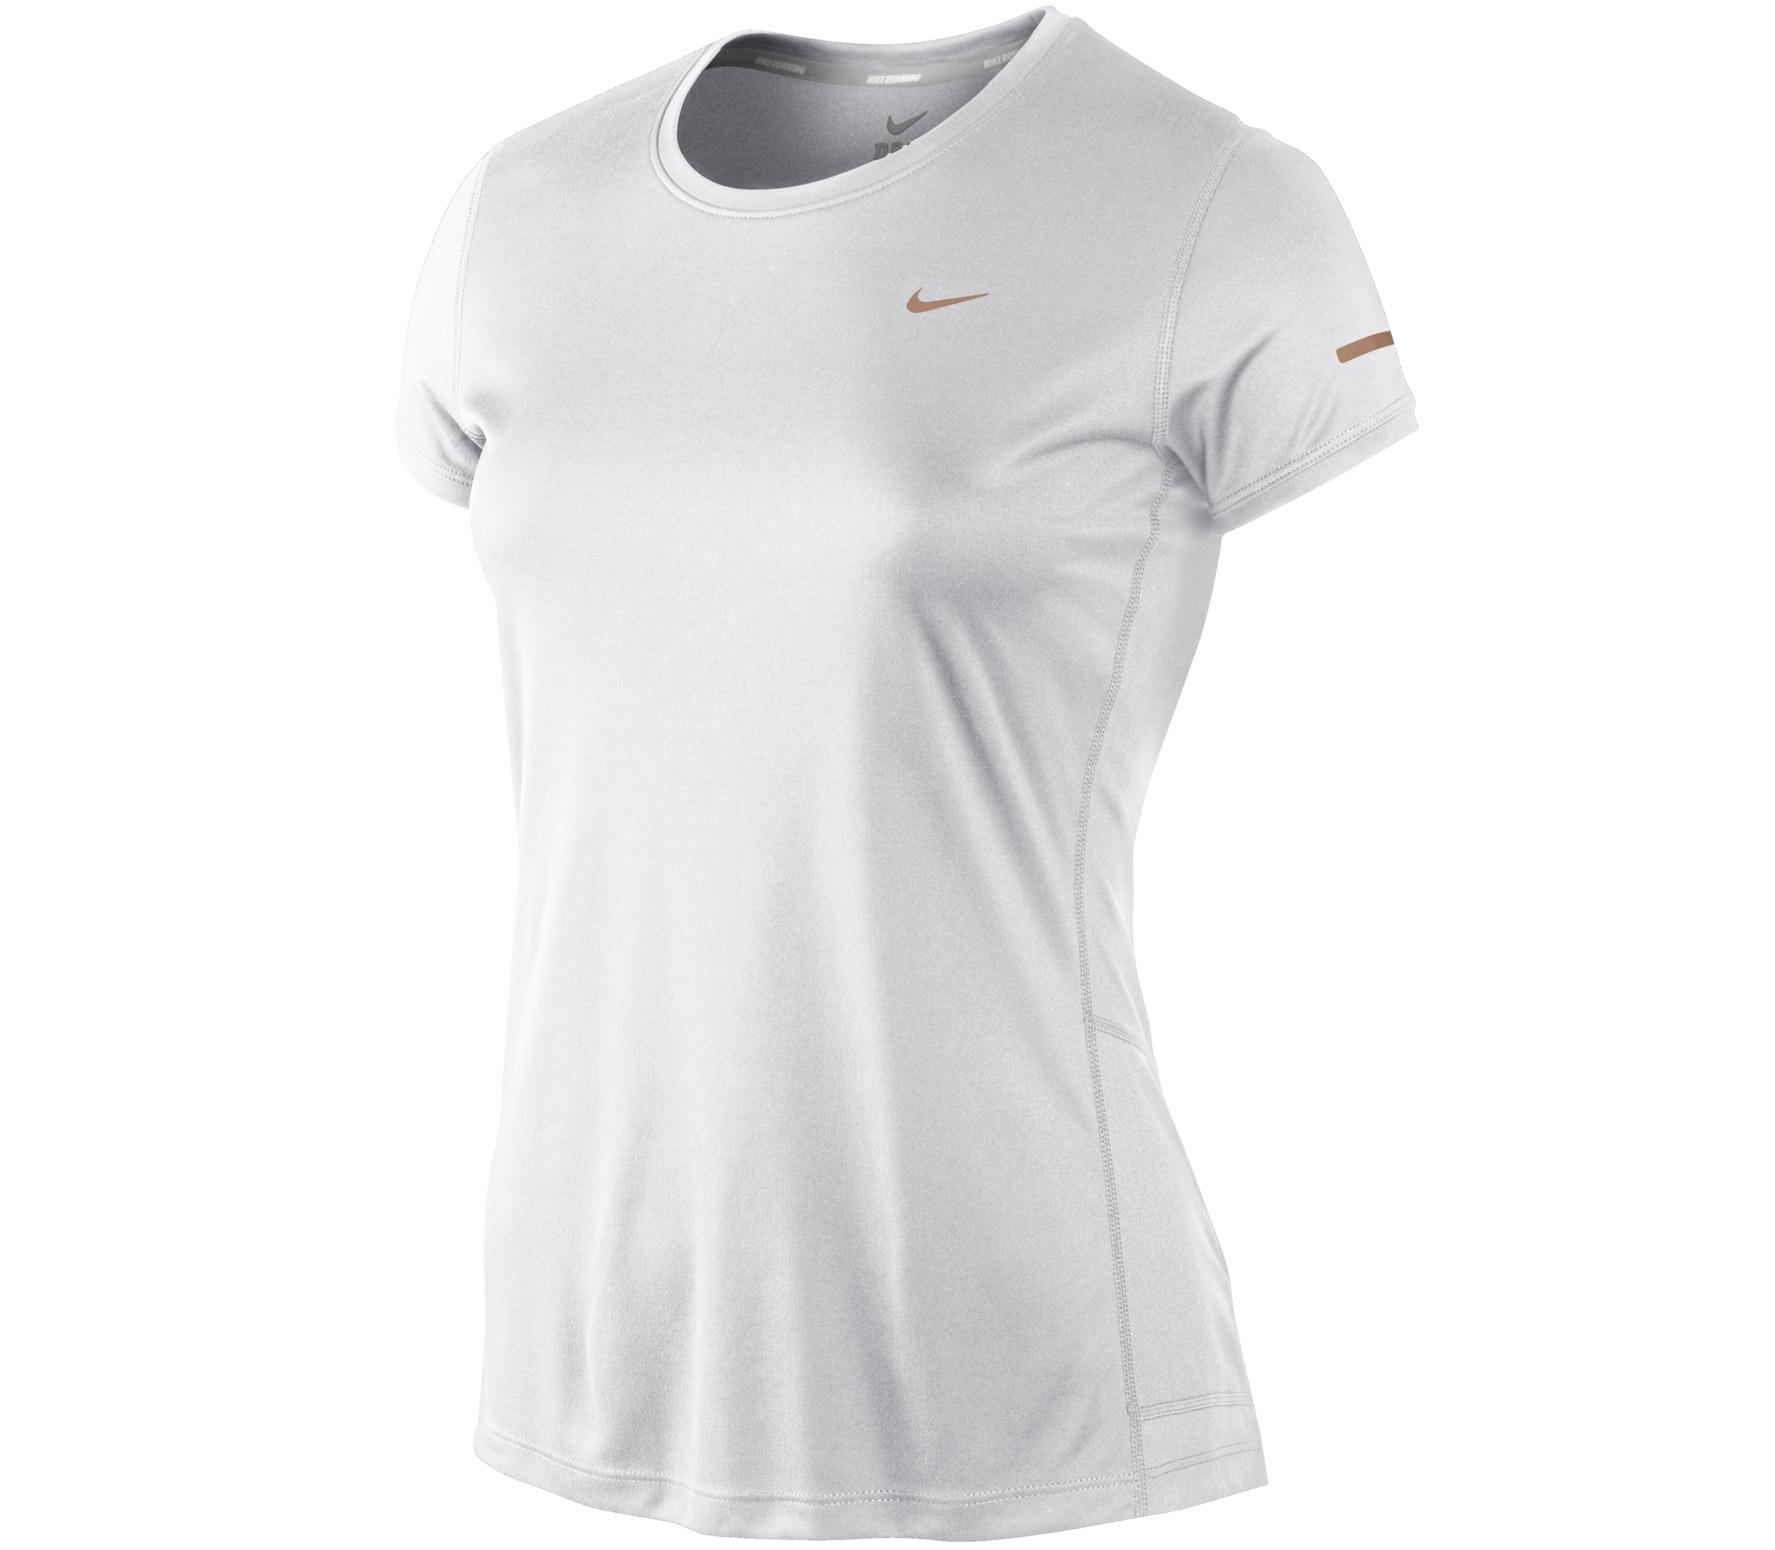 Foto Nike - Camiseta Mujer Nike Miler SS - SU13